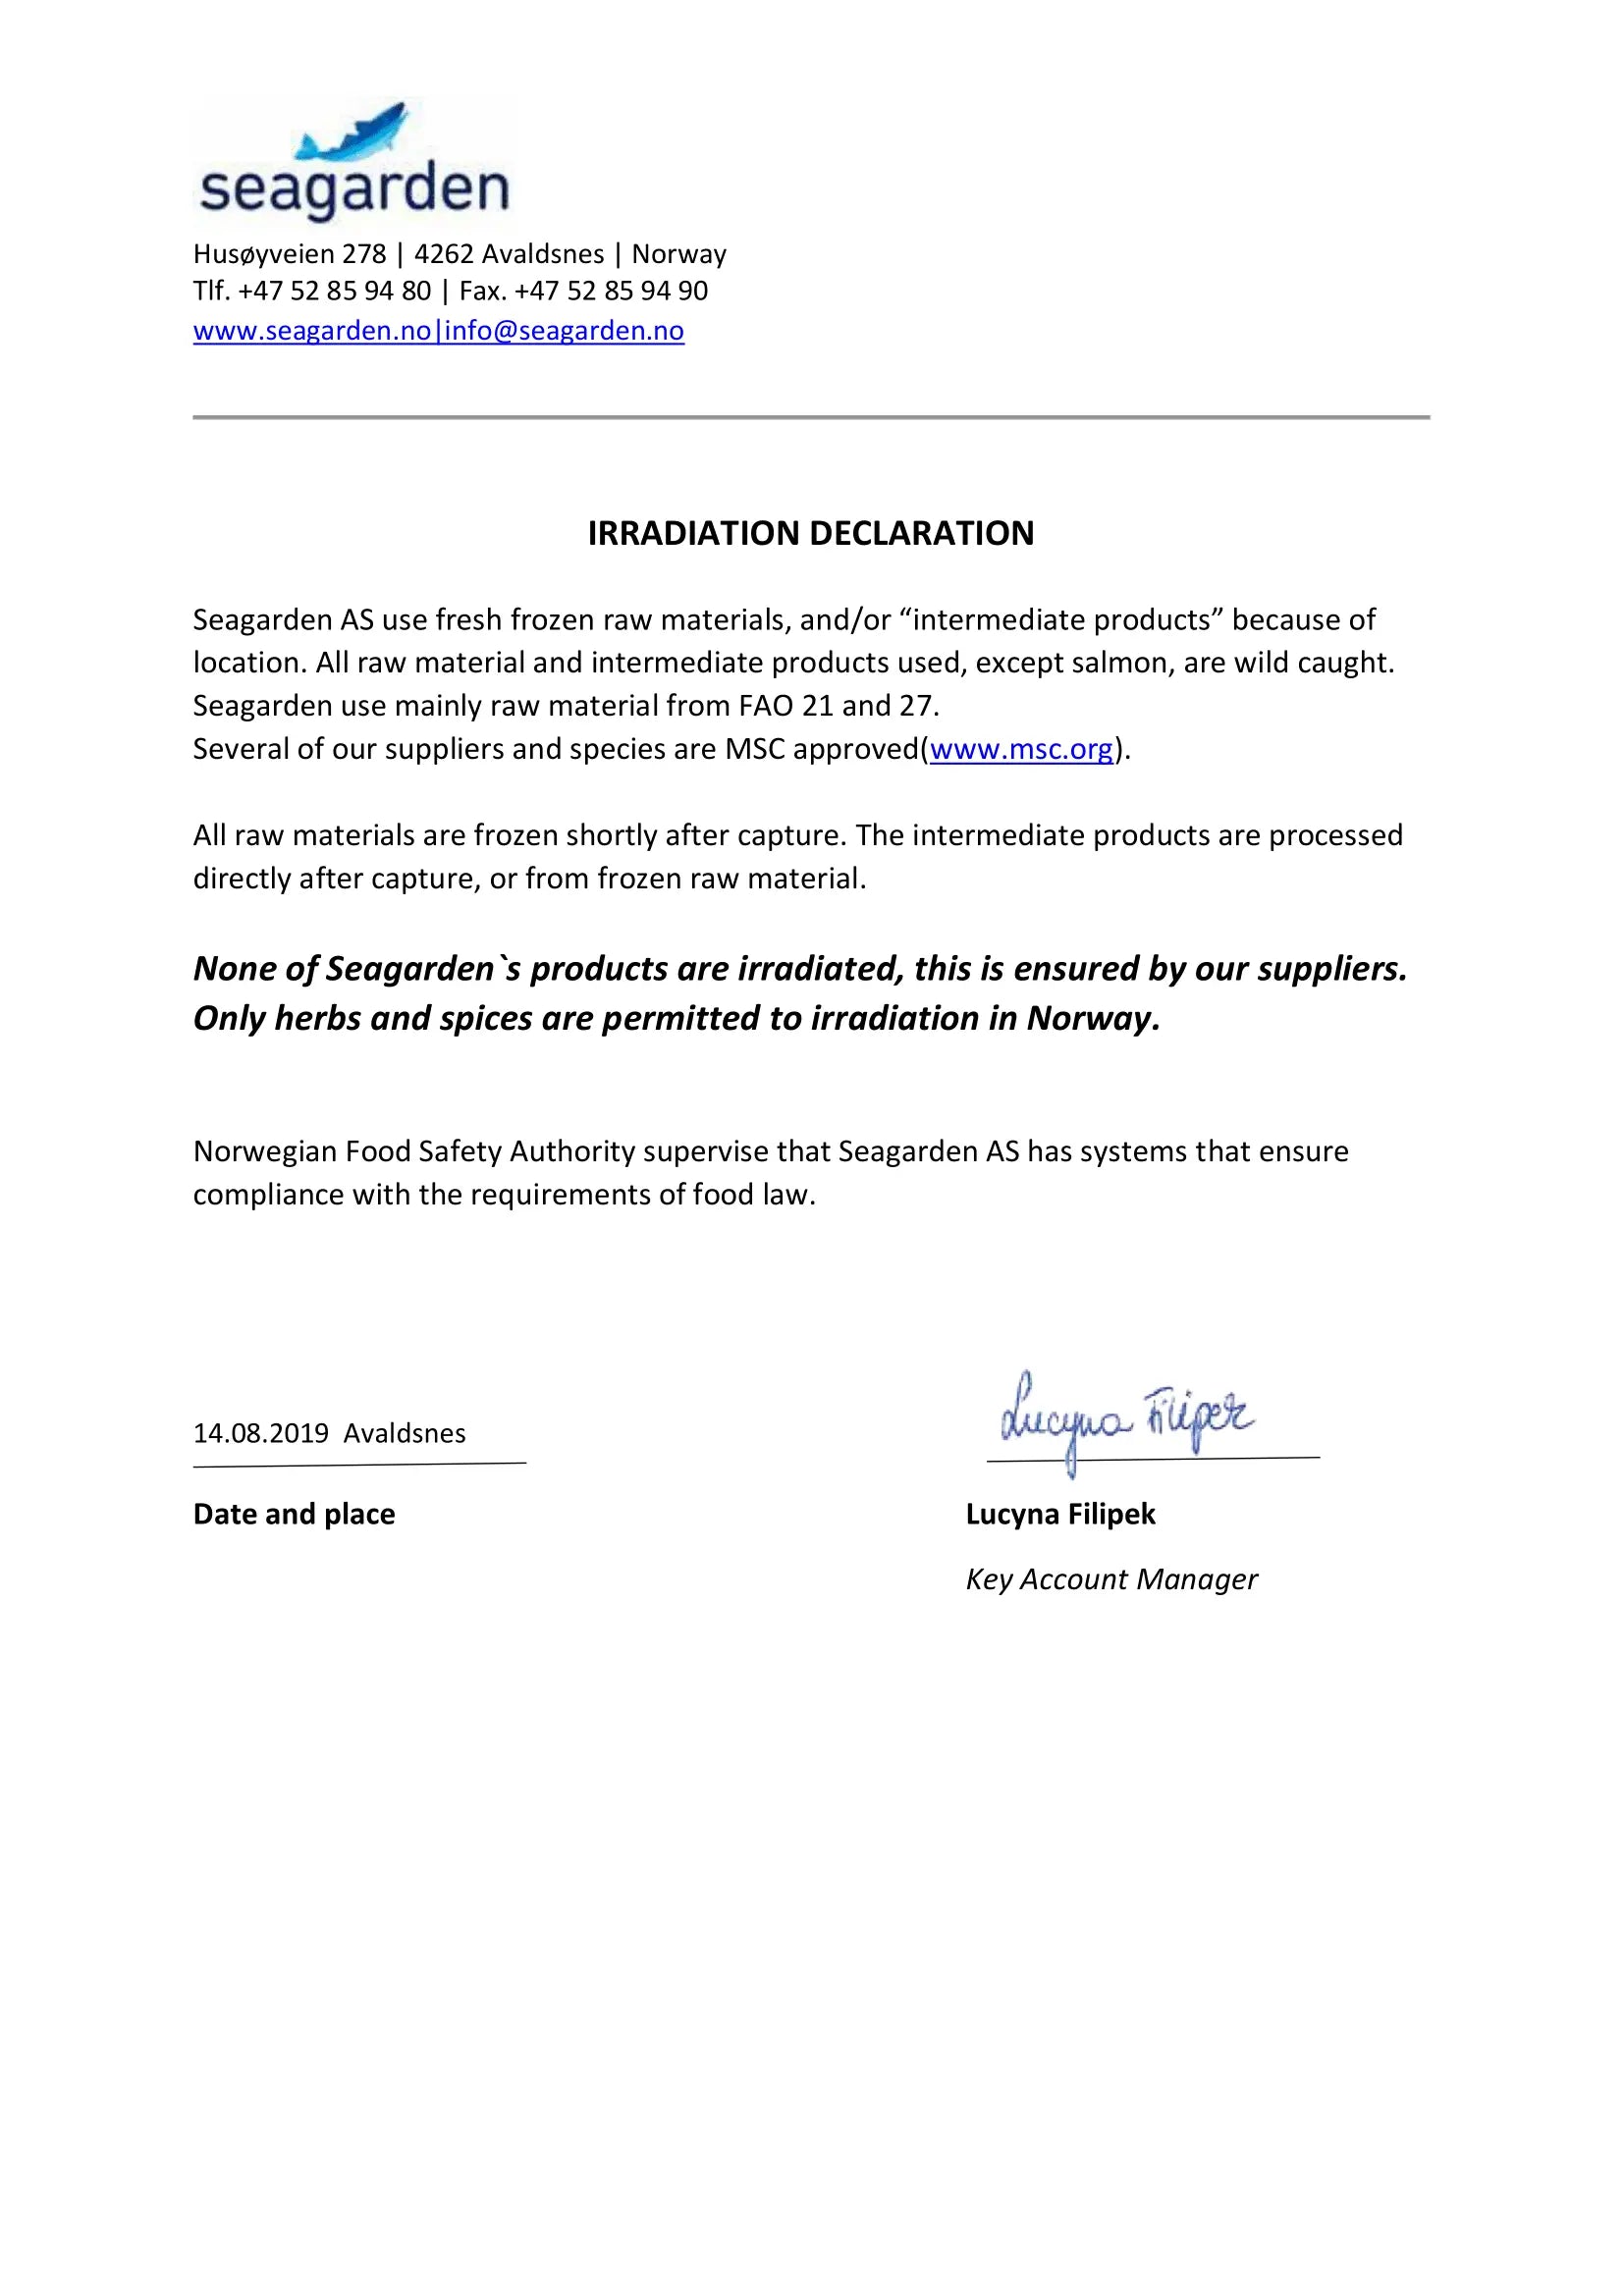 Non-irradiated certificate